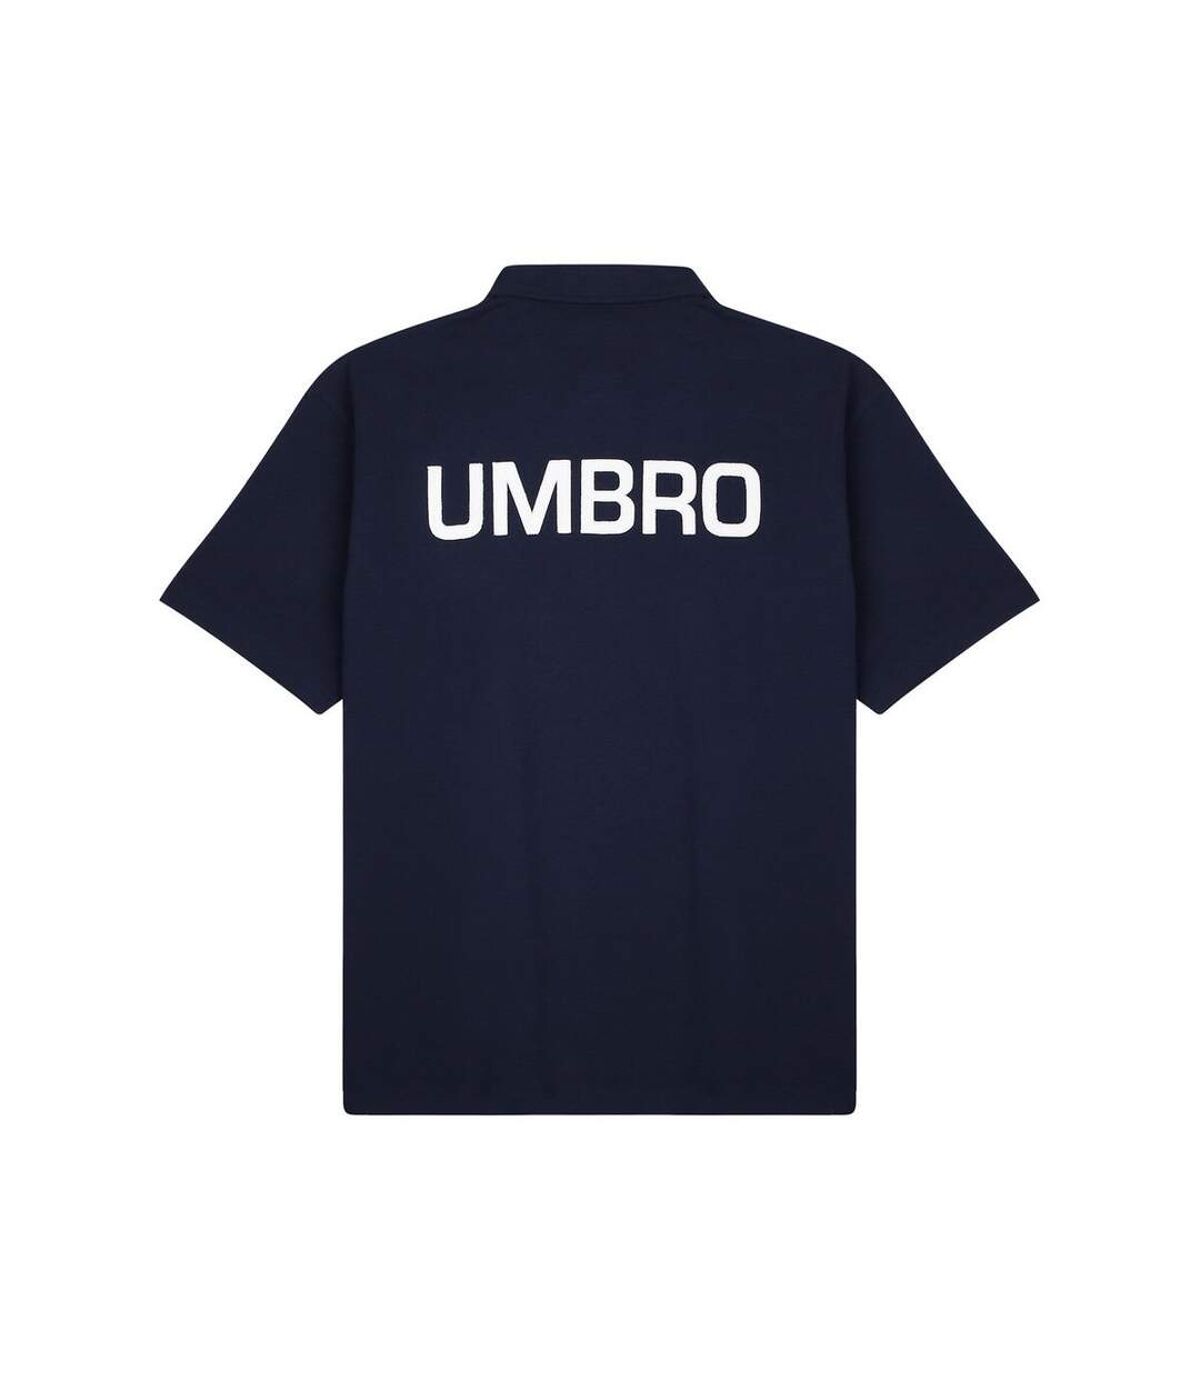 Umbro - Polo NIGEL CABOURN - Homme (Bleu marine) - UTUO277